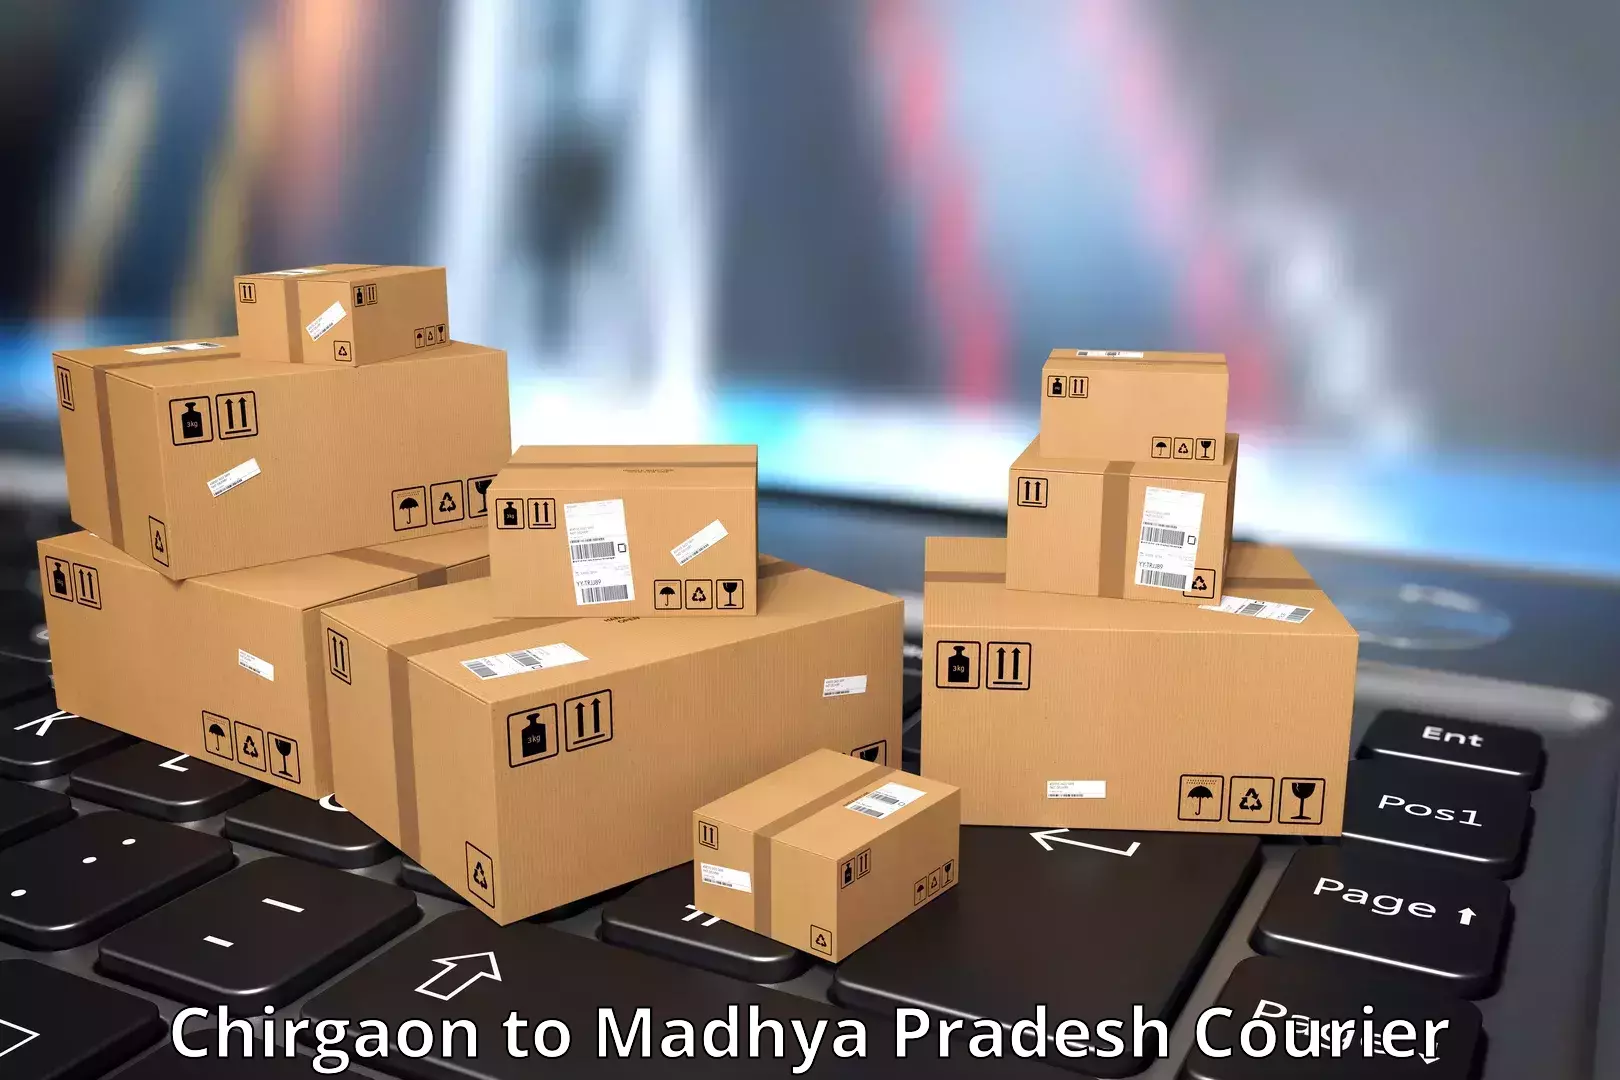 Express delivery capabilities Chirgaon to Madhya Pradesh